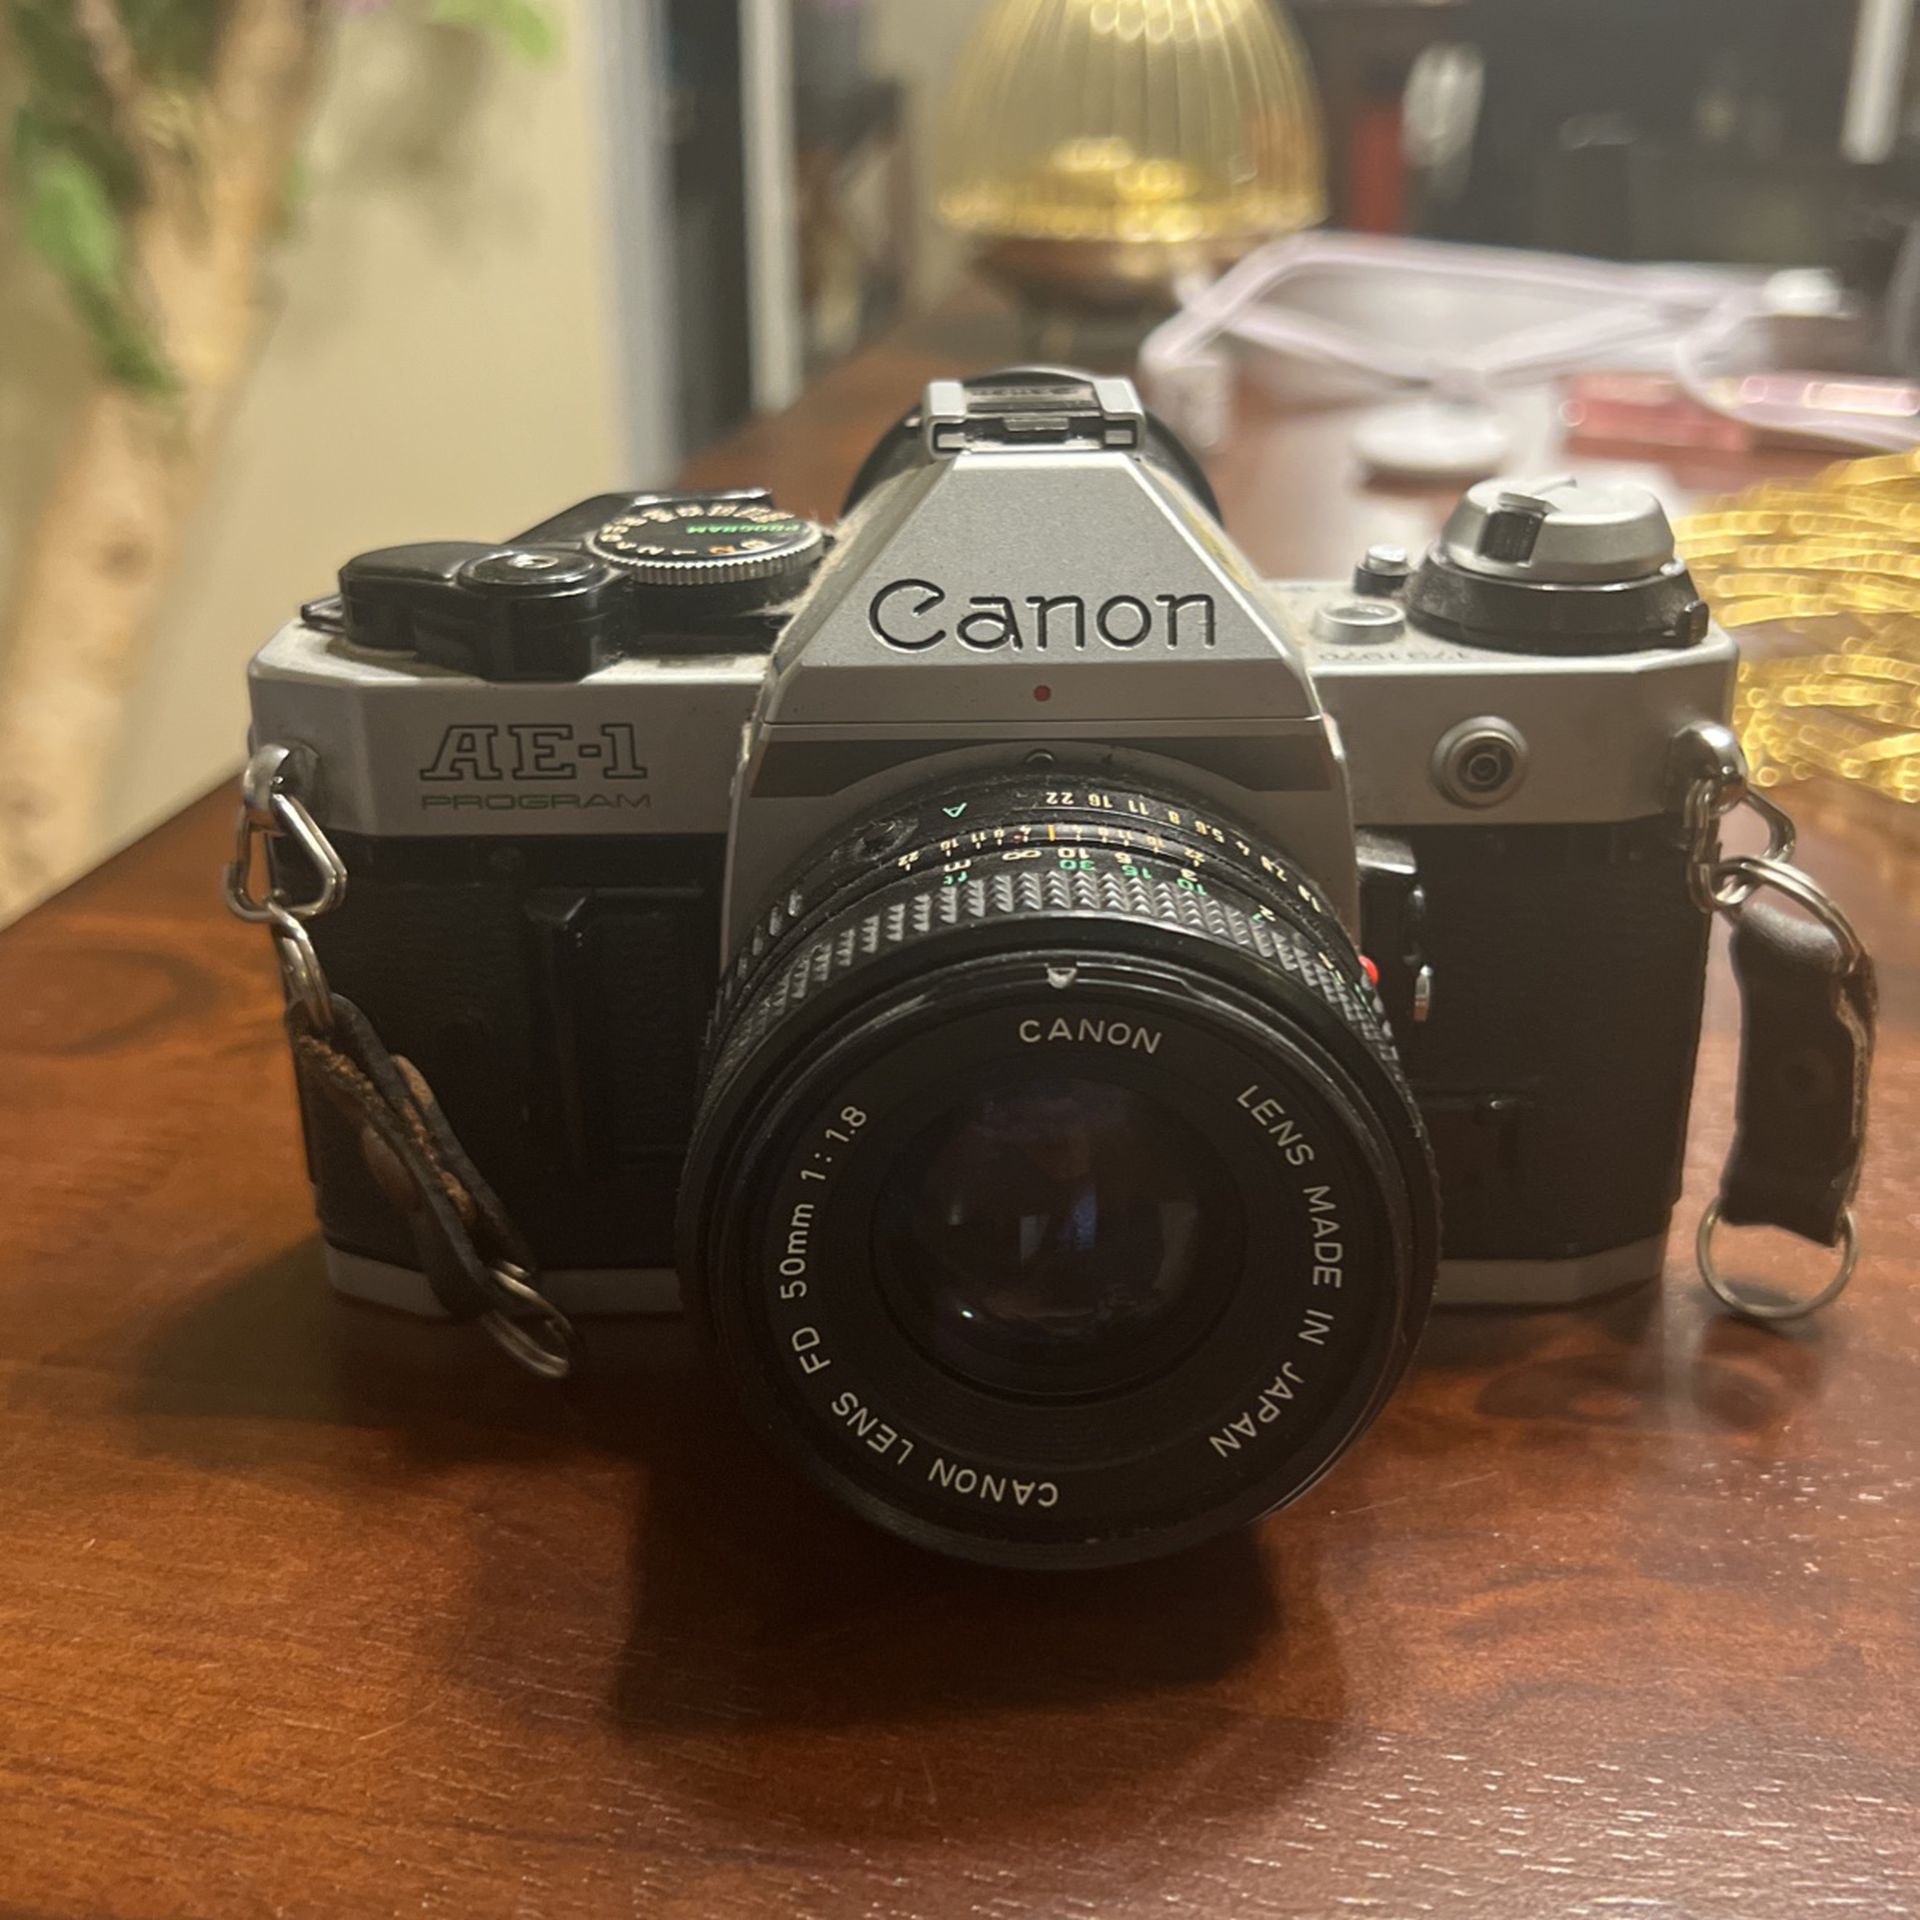 Vintage Canon Camera